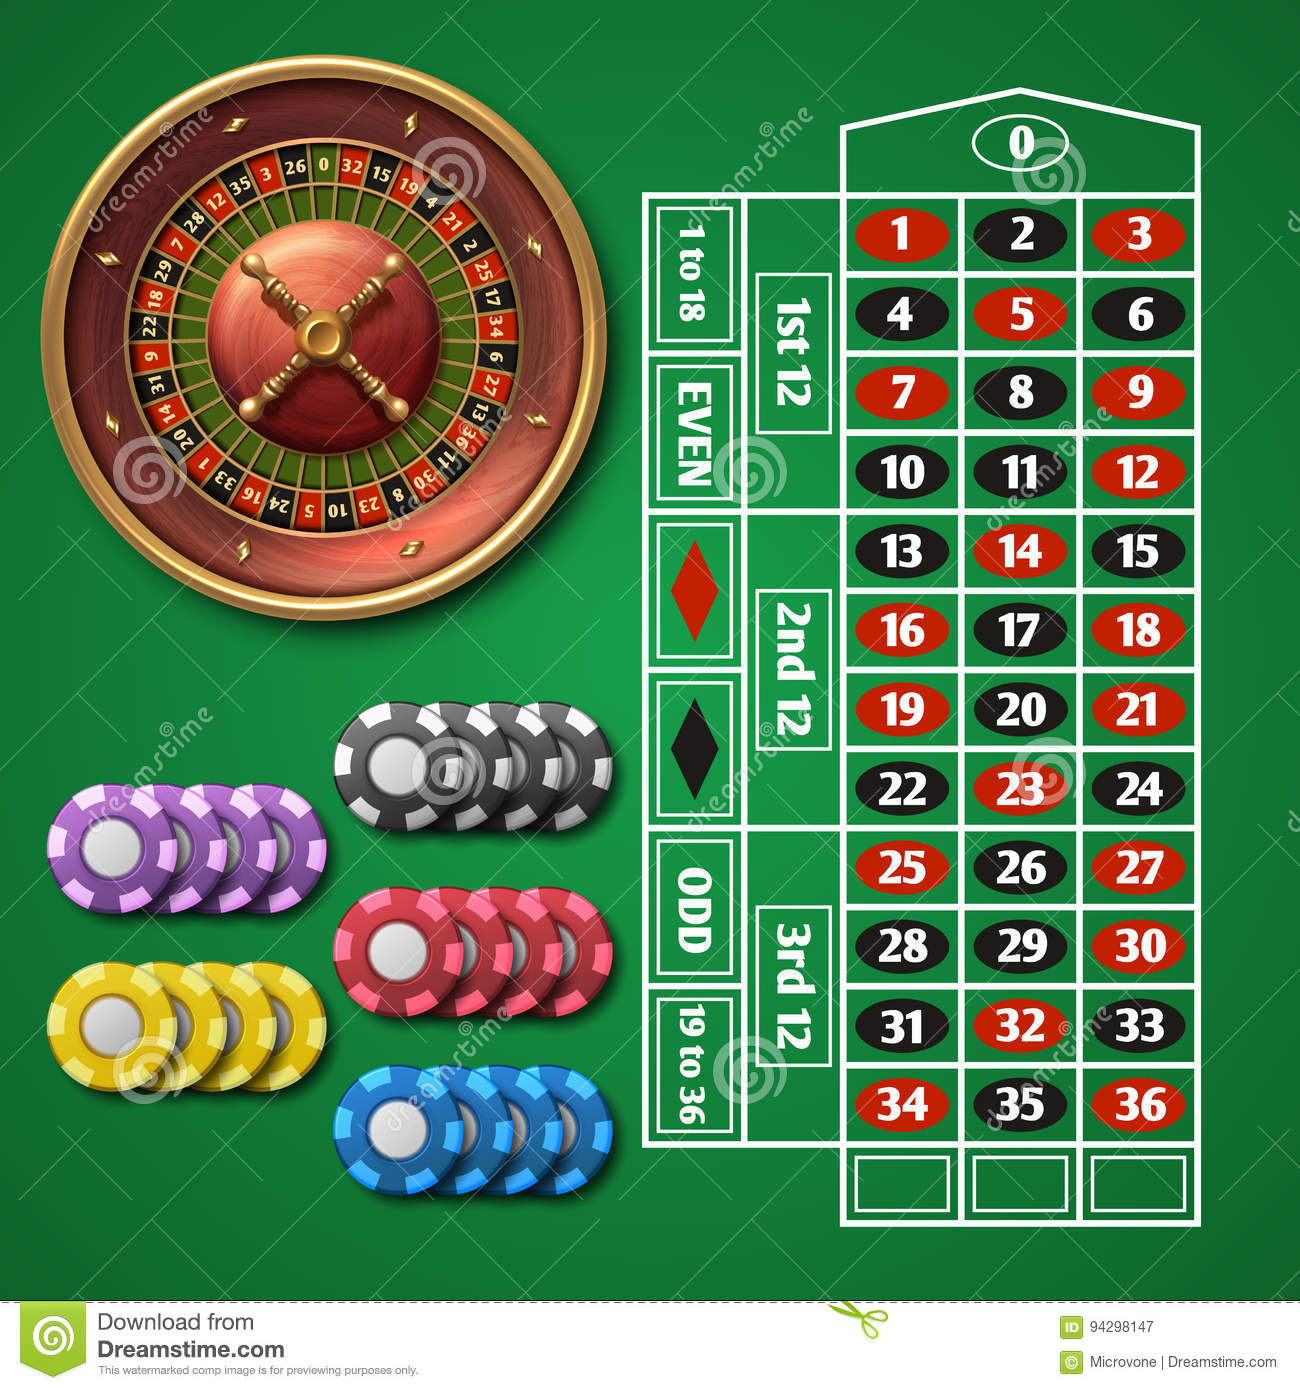 Casinos online jogo